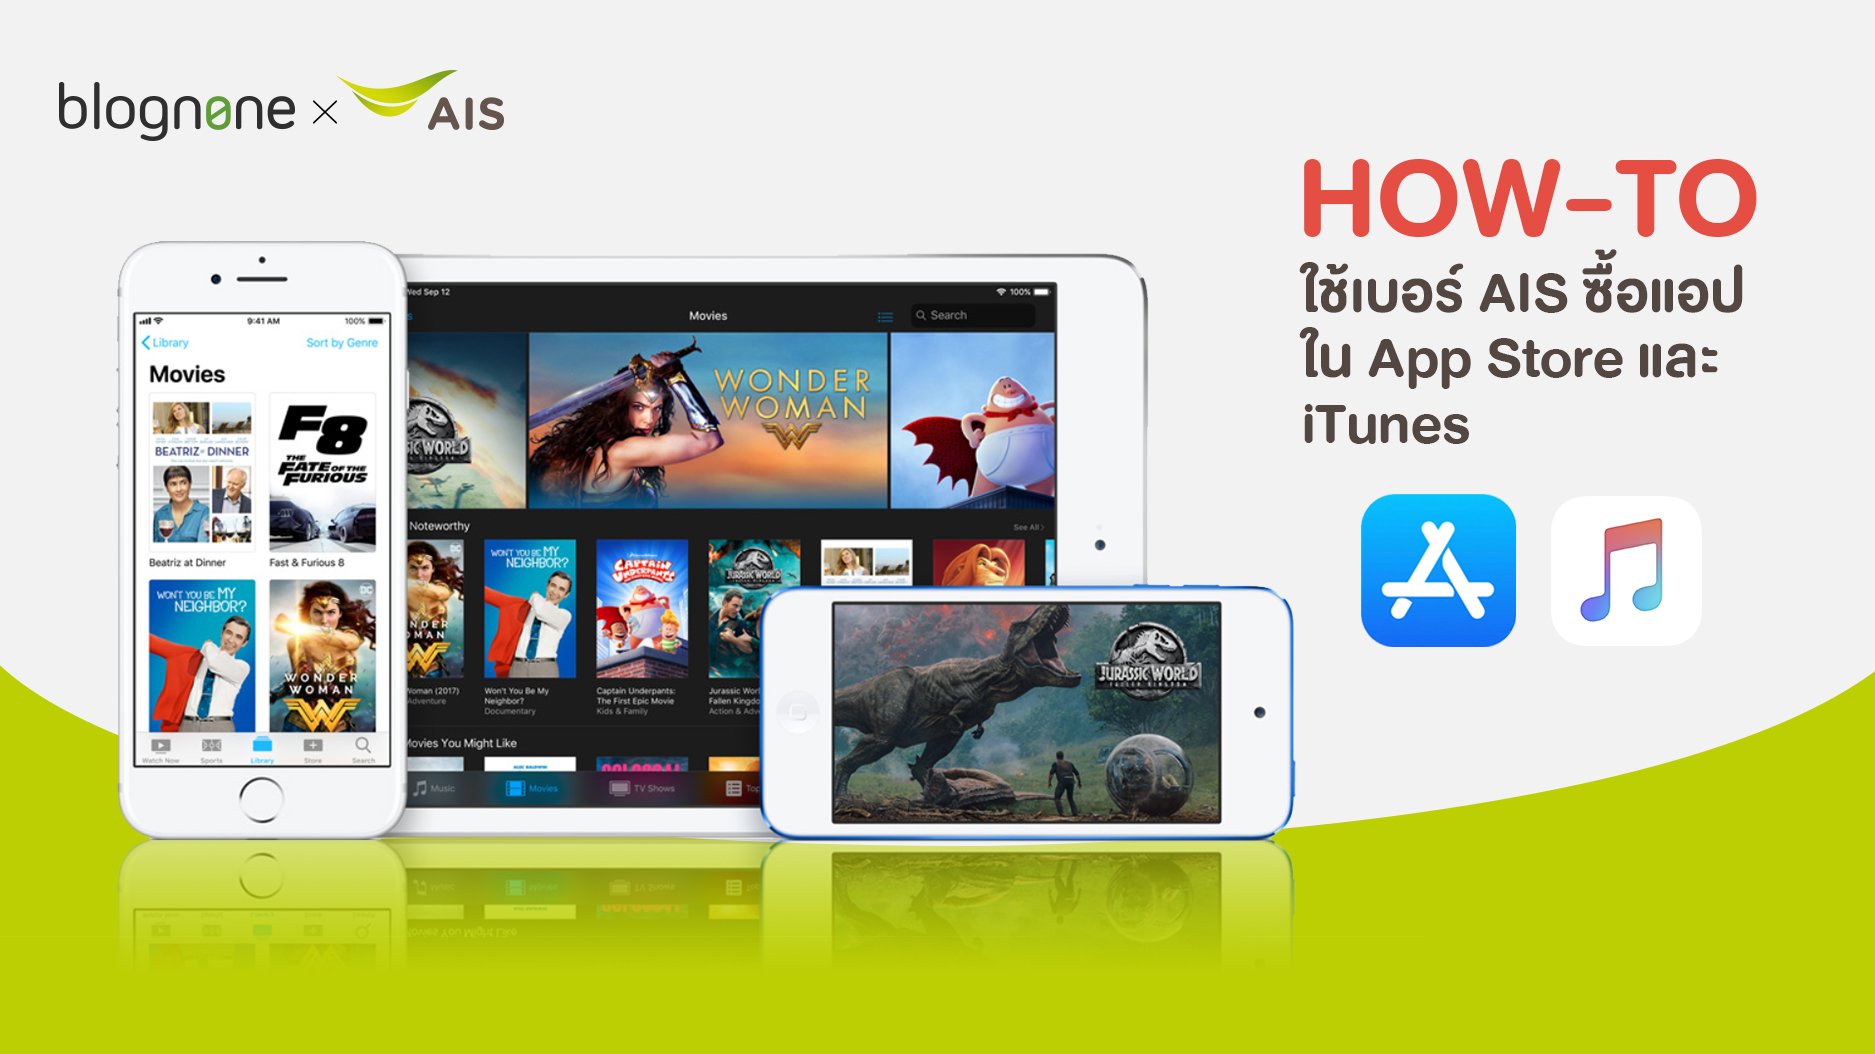 Howto] ลูกค้า Ais สามารถจ่ายค่าซื้อแอป เกม หนัง เพลง ใน App Store และ  Itunes โดยใช้เบอร์โทรศัพท์ได้แล้ว | Blognone